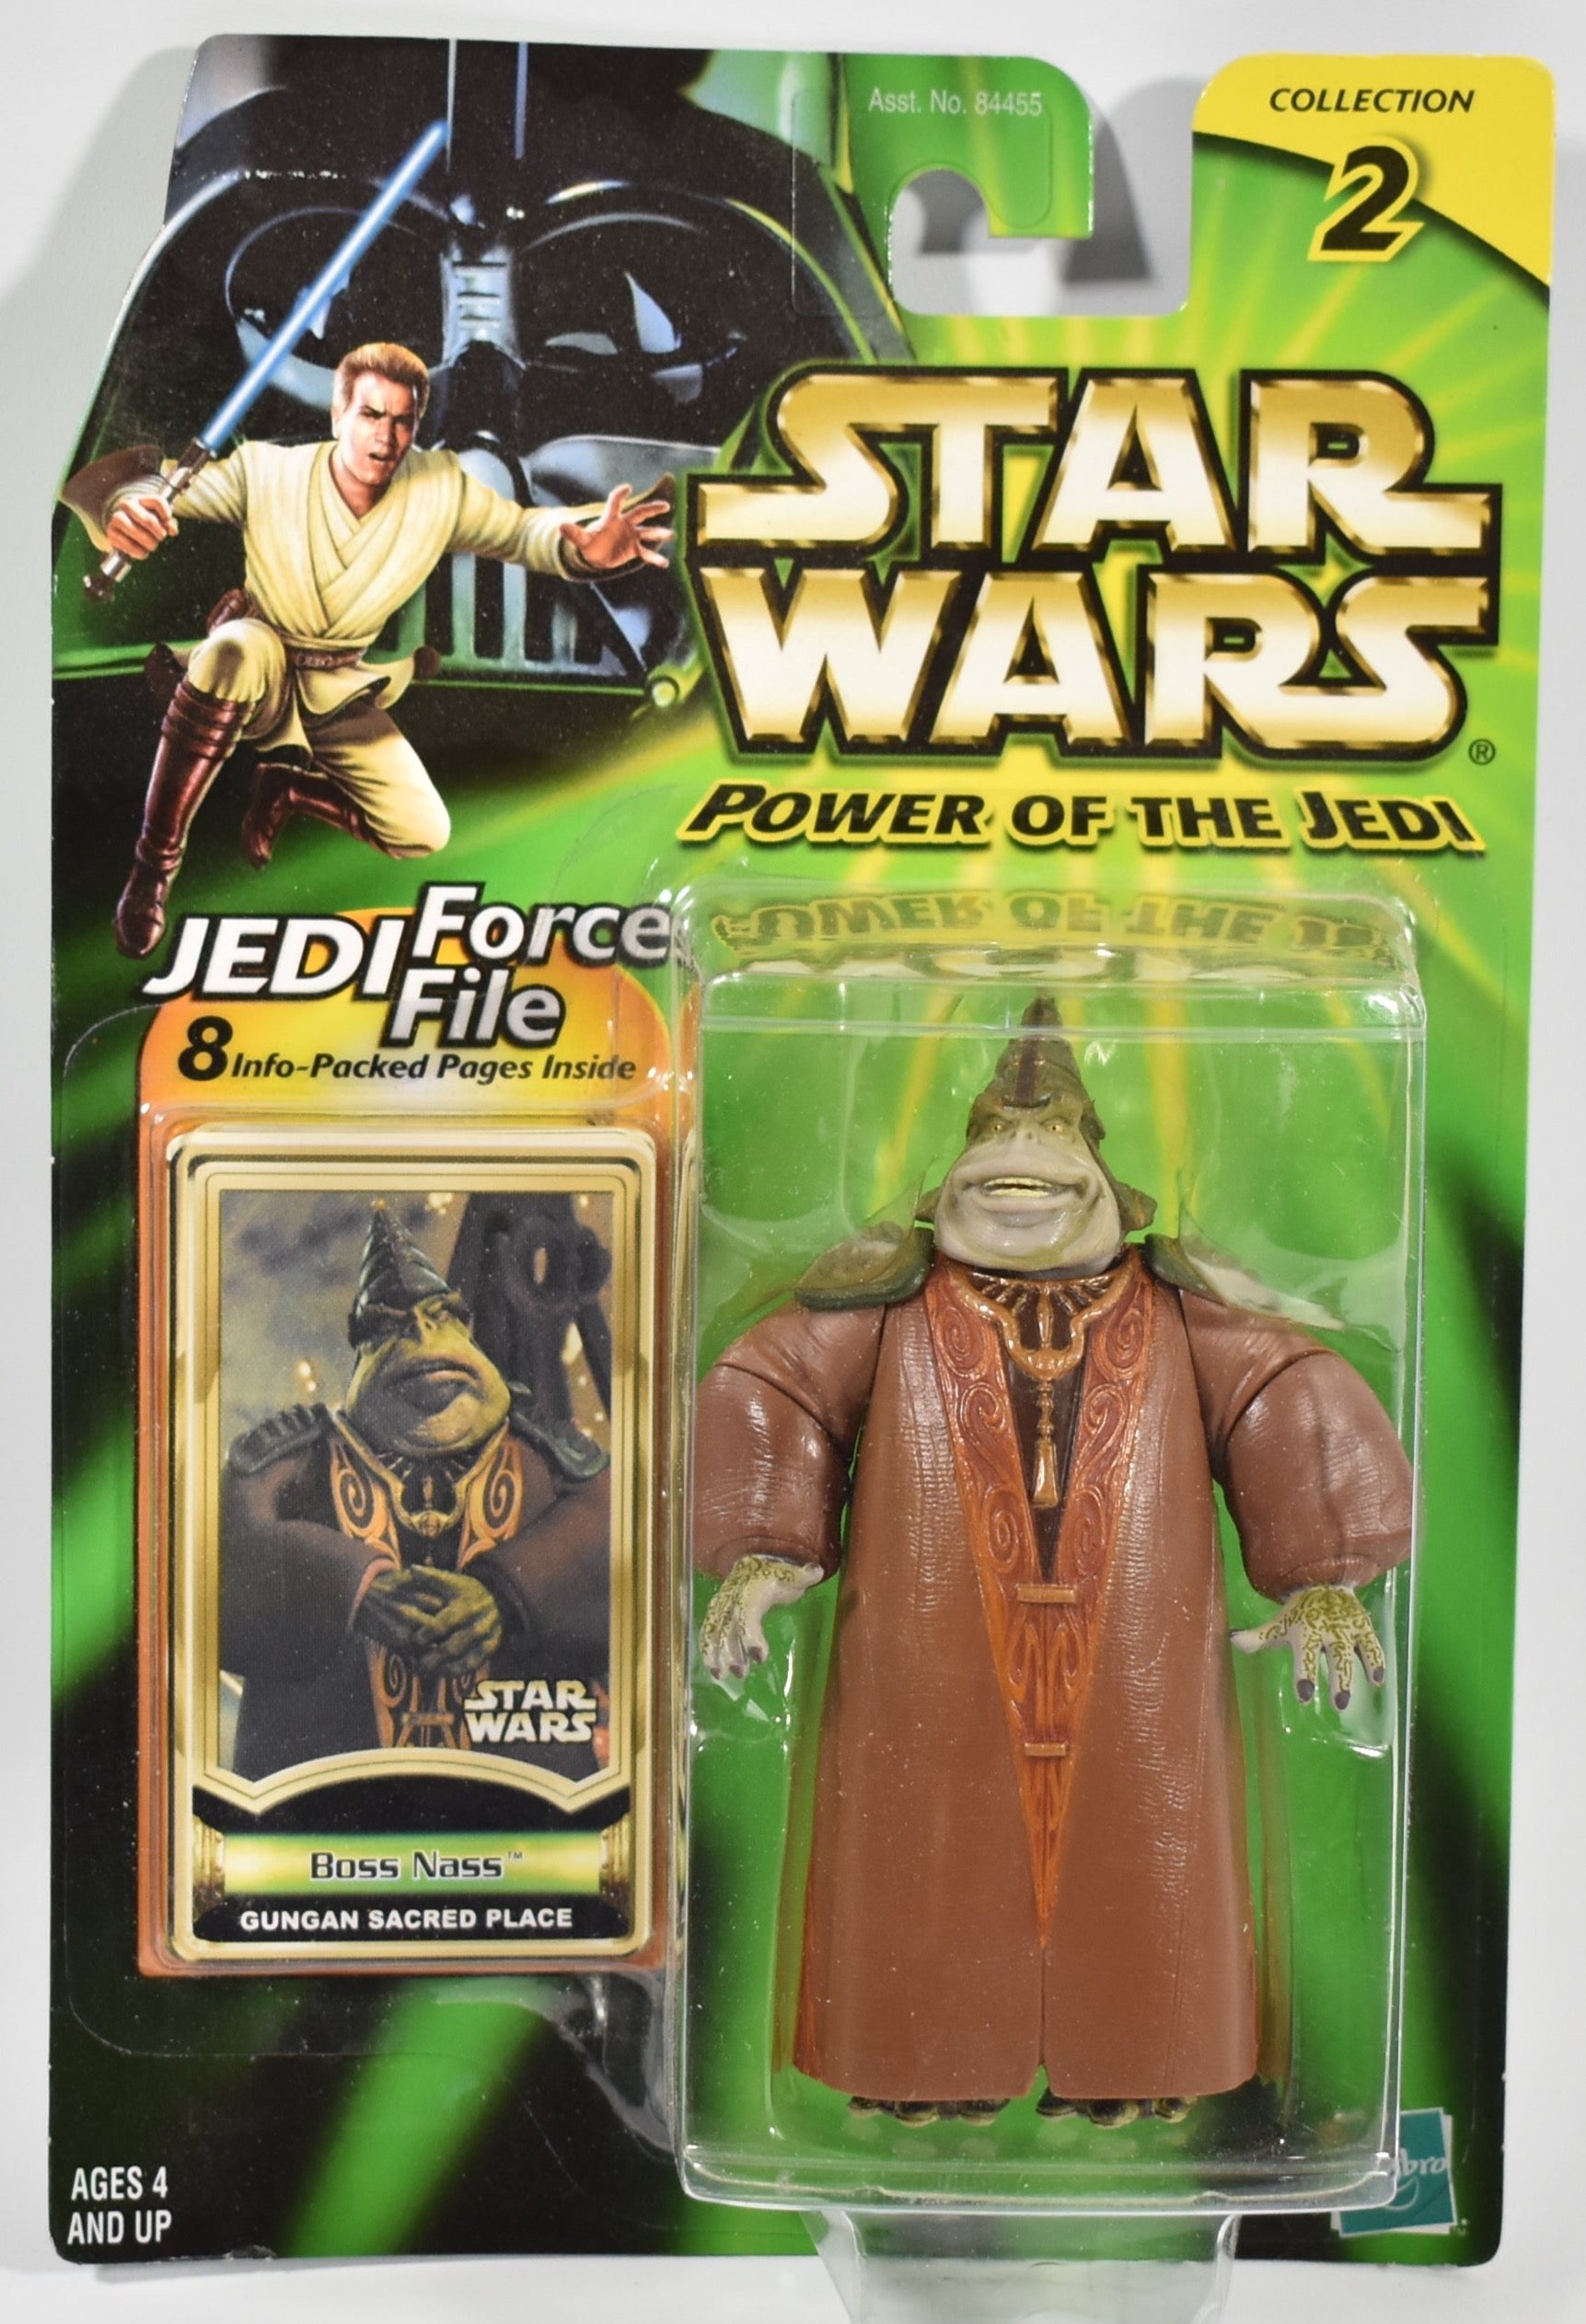 Star Wars Power of the Jedi Action Figure Boss Nass Gungan Sacred Place Hasbro